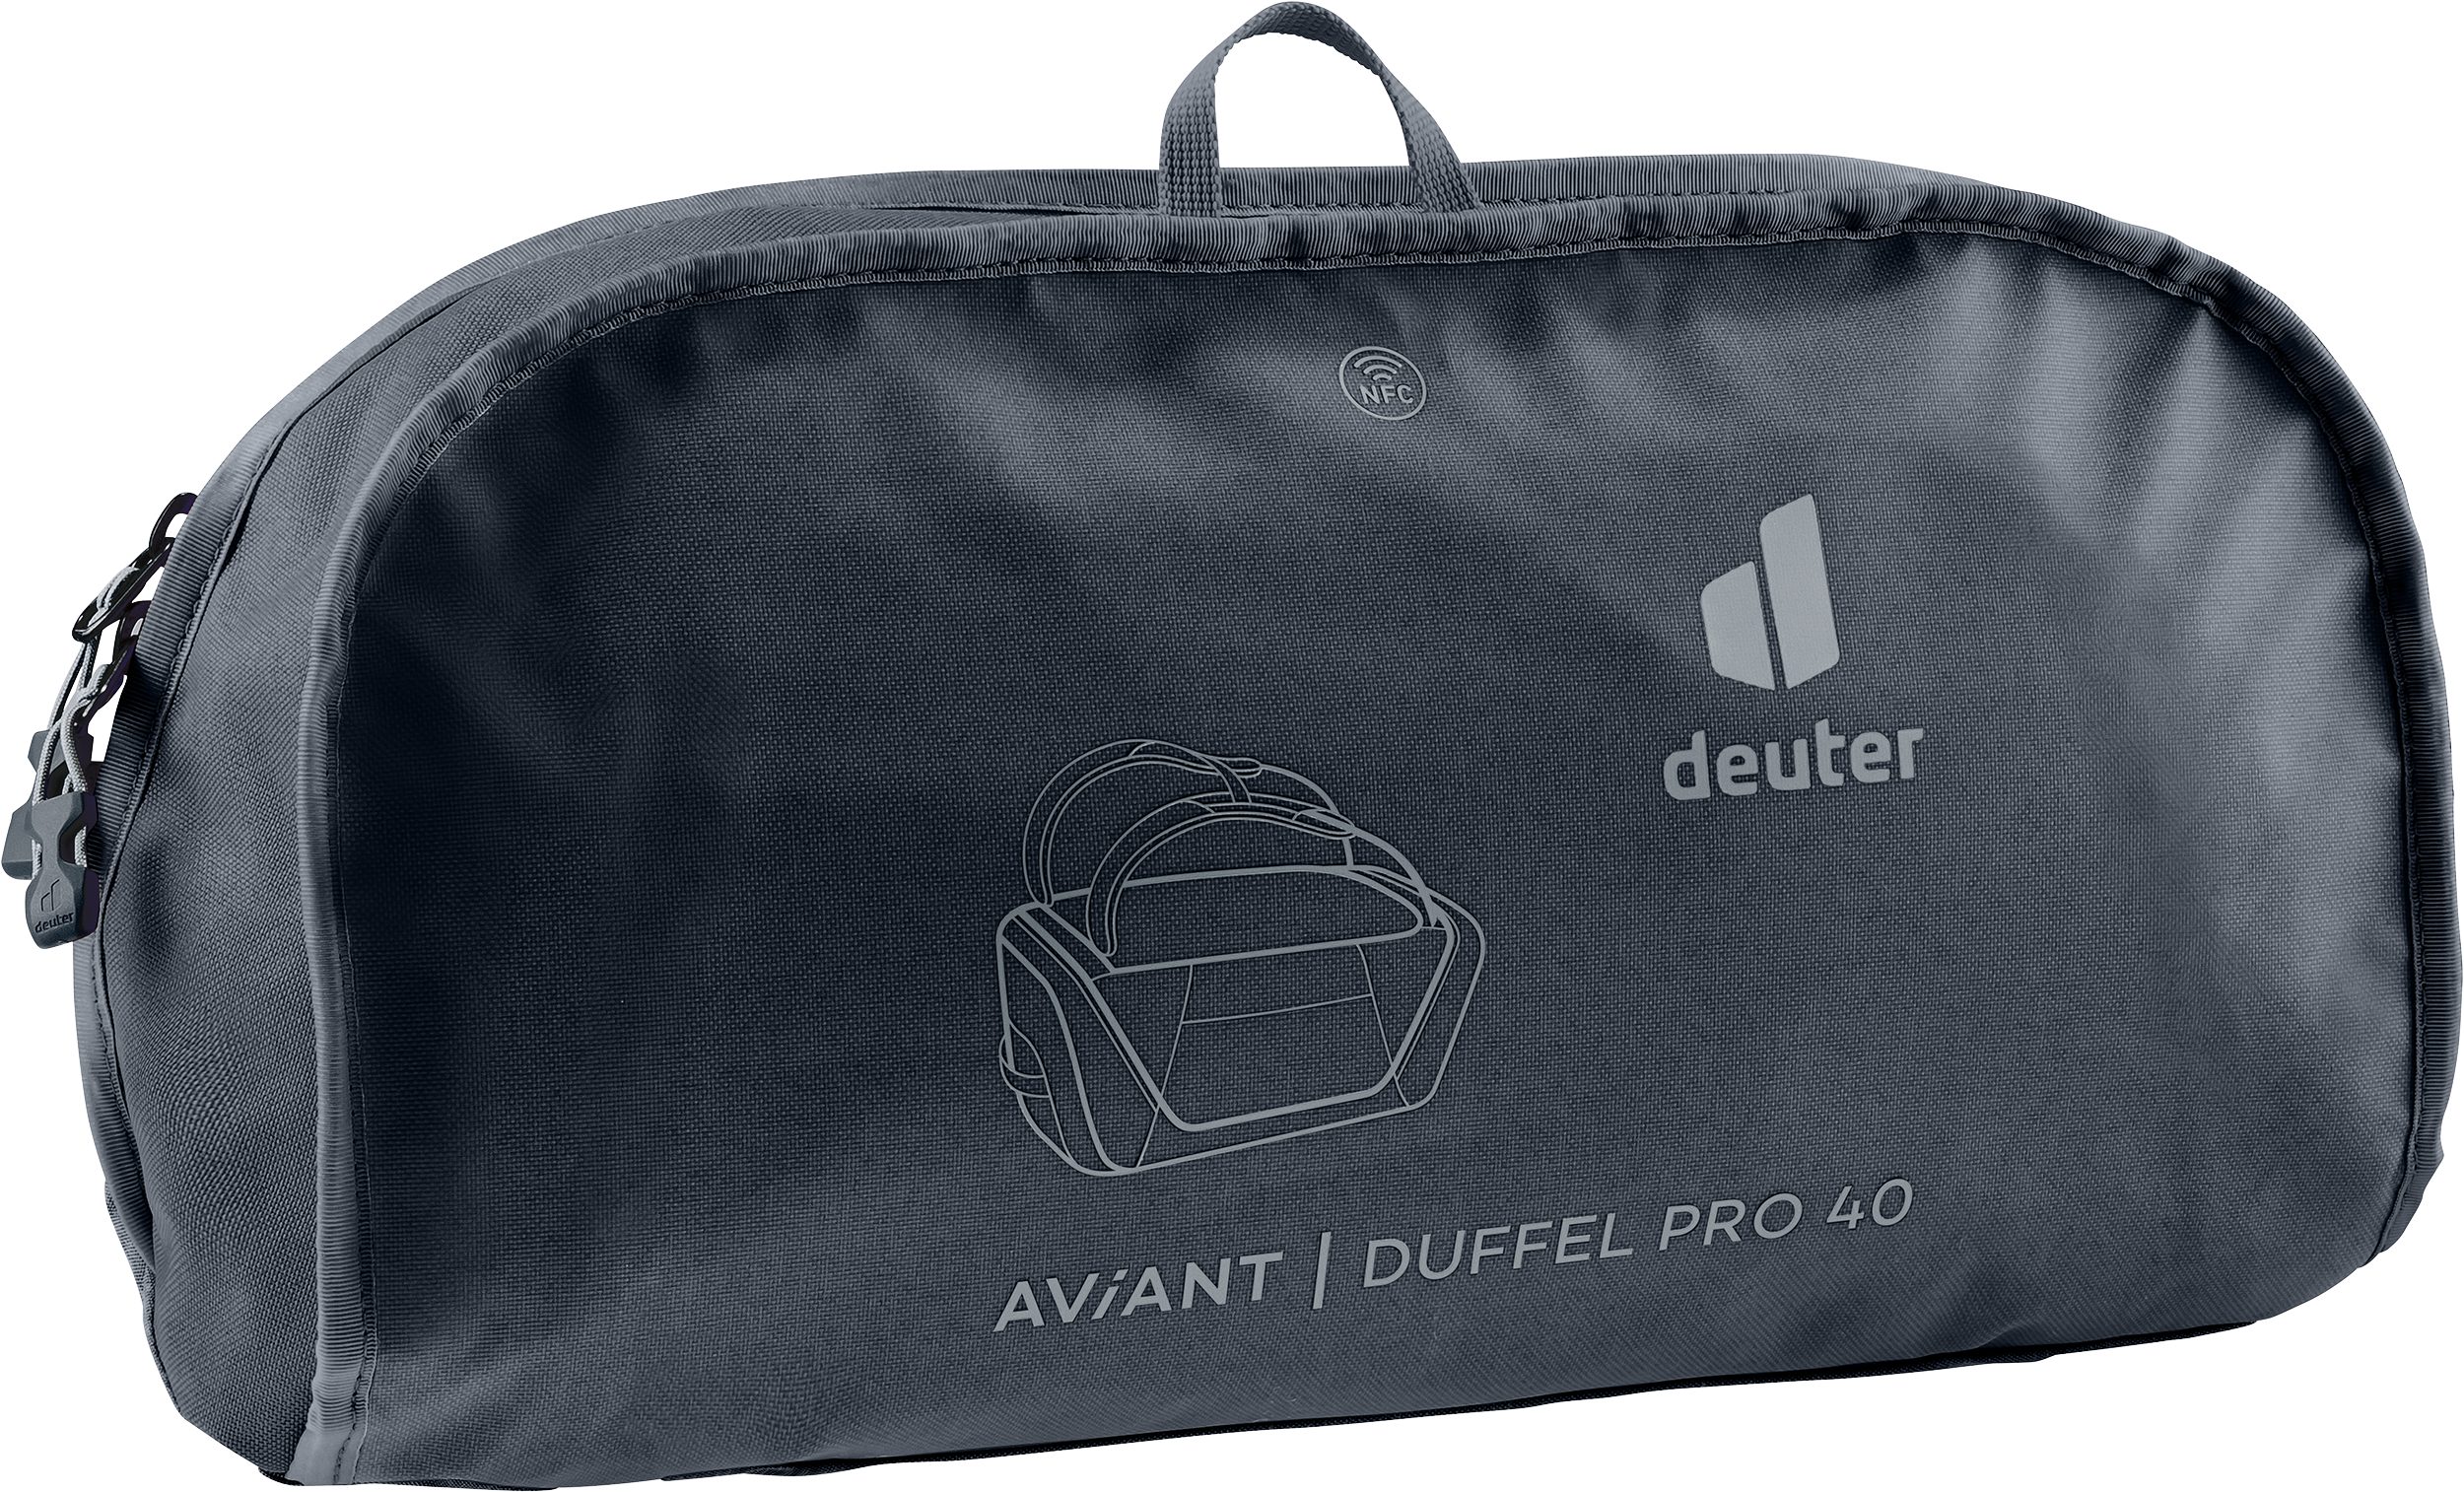 Reisetasche deuter AViANT Duffel black 40 Pro